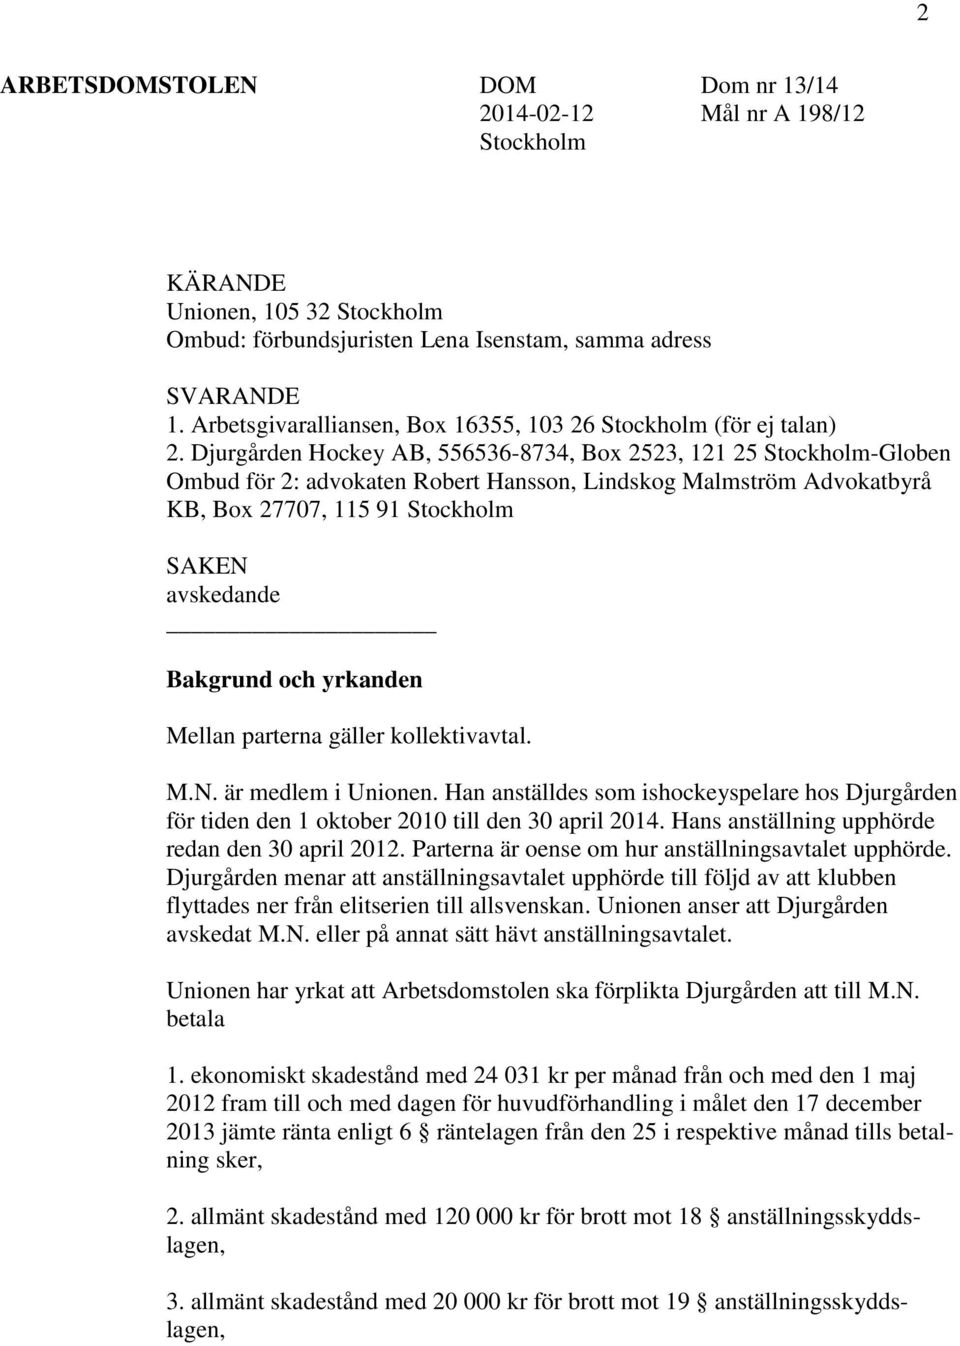 Djurgården Hockey AB, 556536-8734, Box 2523, 121 25 Stockholm-Globen Ombud för 2: advokaten Robert Hansson, Lindskog Malmström Advokatbyrå KB, Box 27707, 115 91 Stockholm SAKEN avskedande Bakgrund